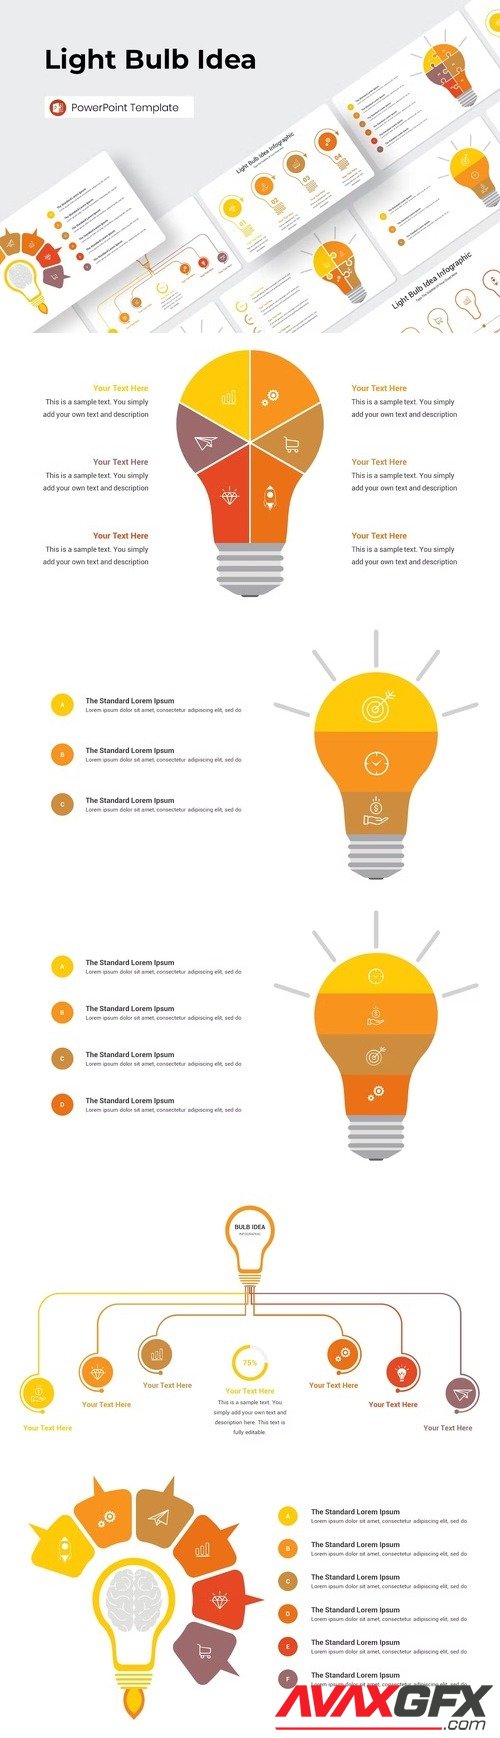 Light Bulb Idea PowerPoint Template [PPTX]